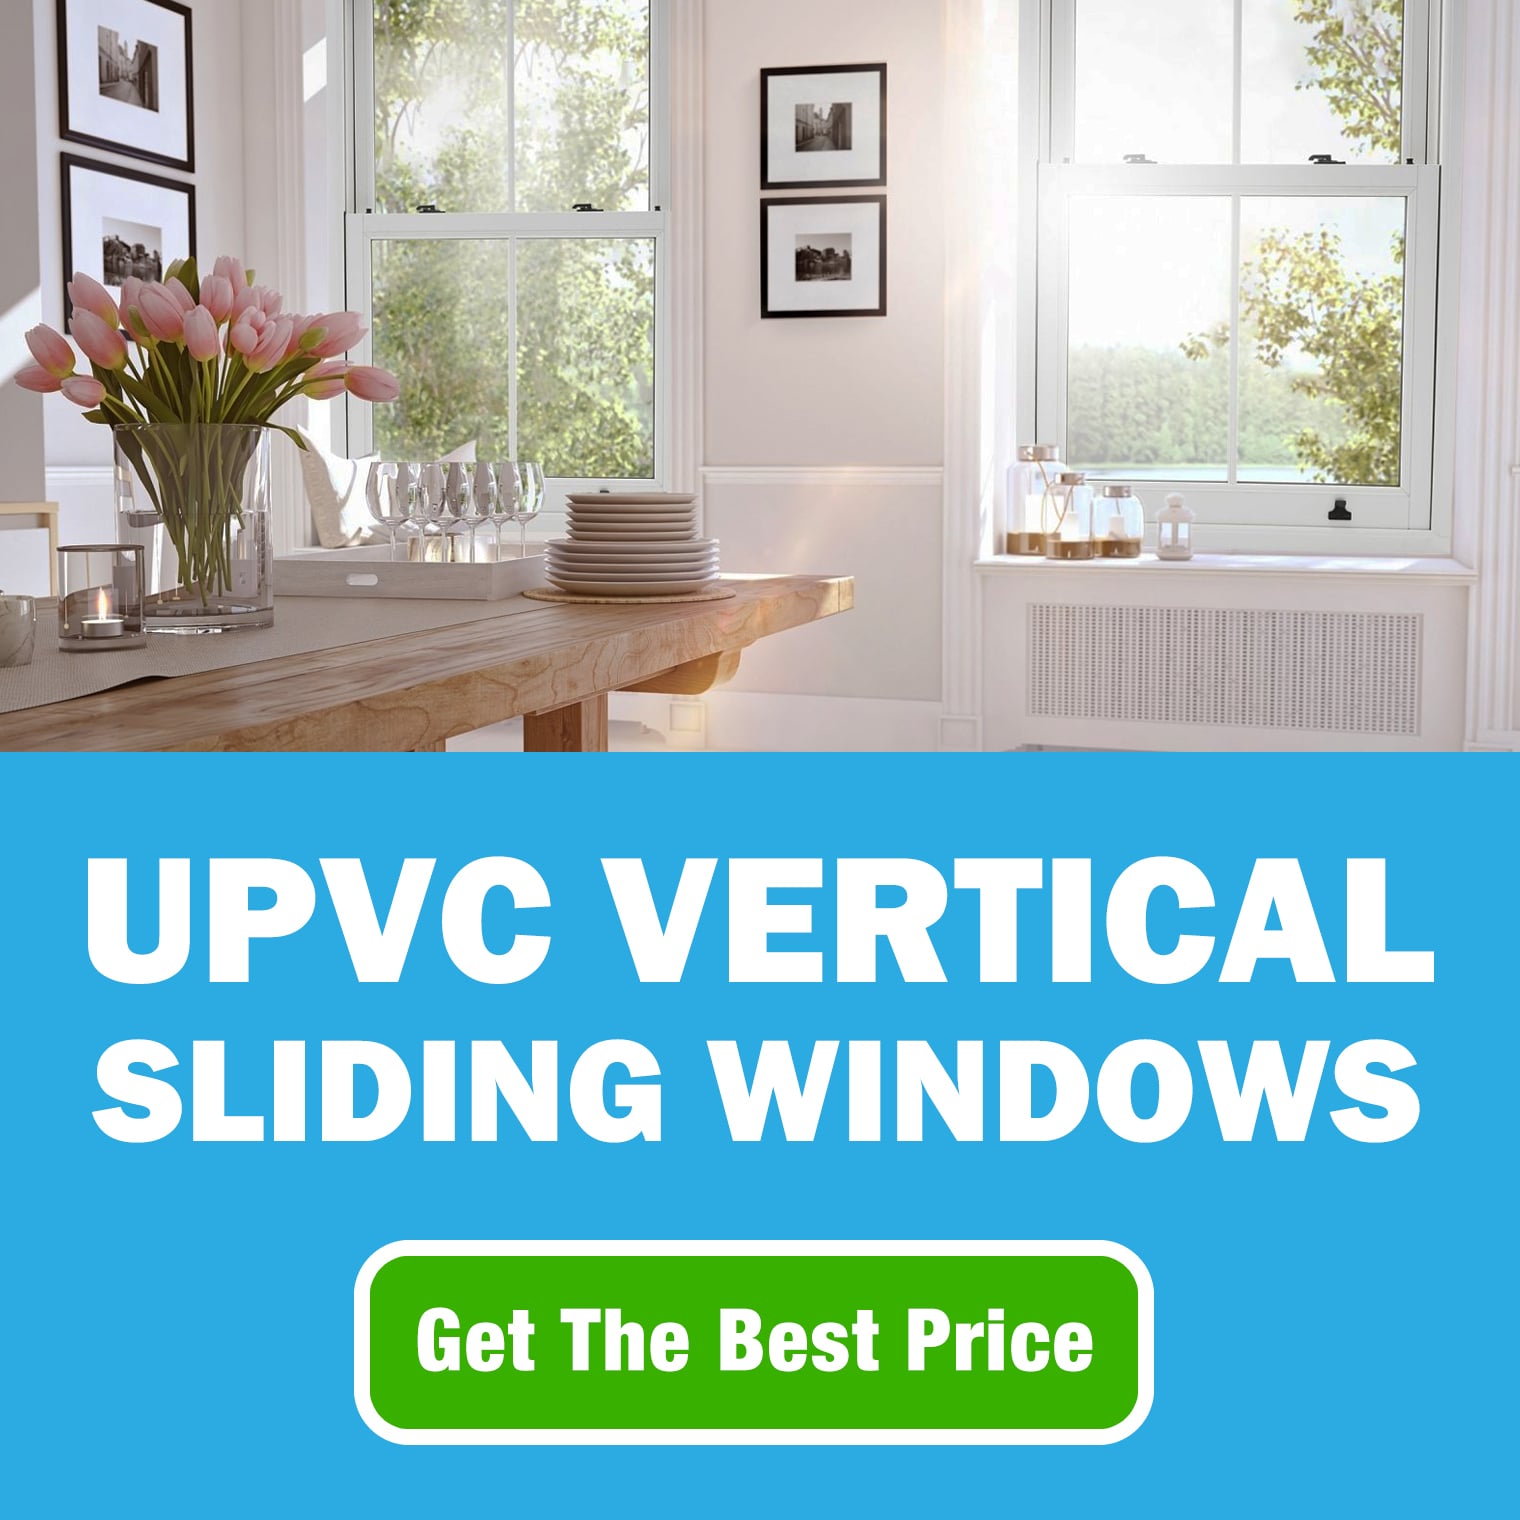 UPVC vertical sliding windows